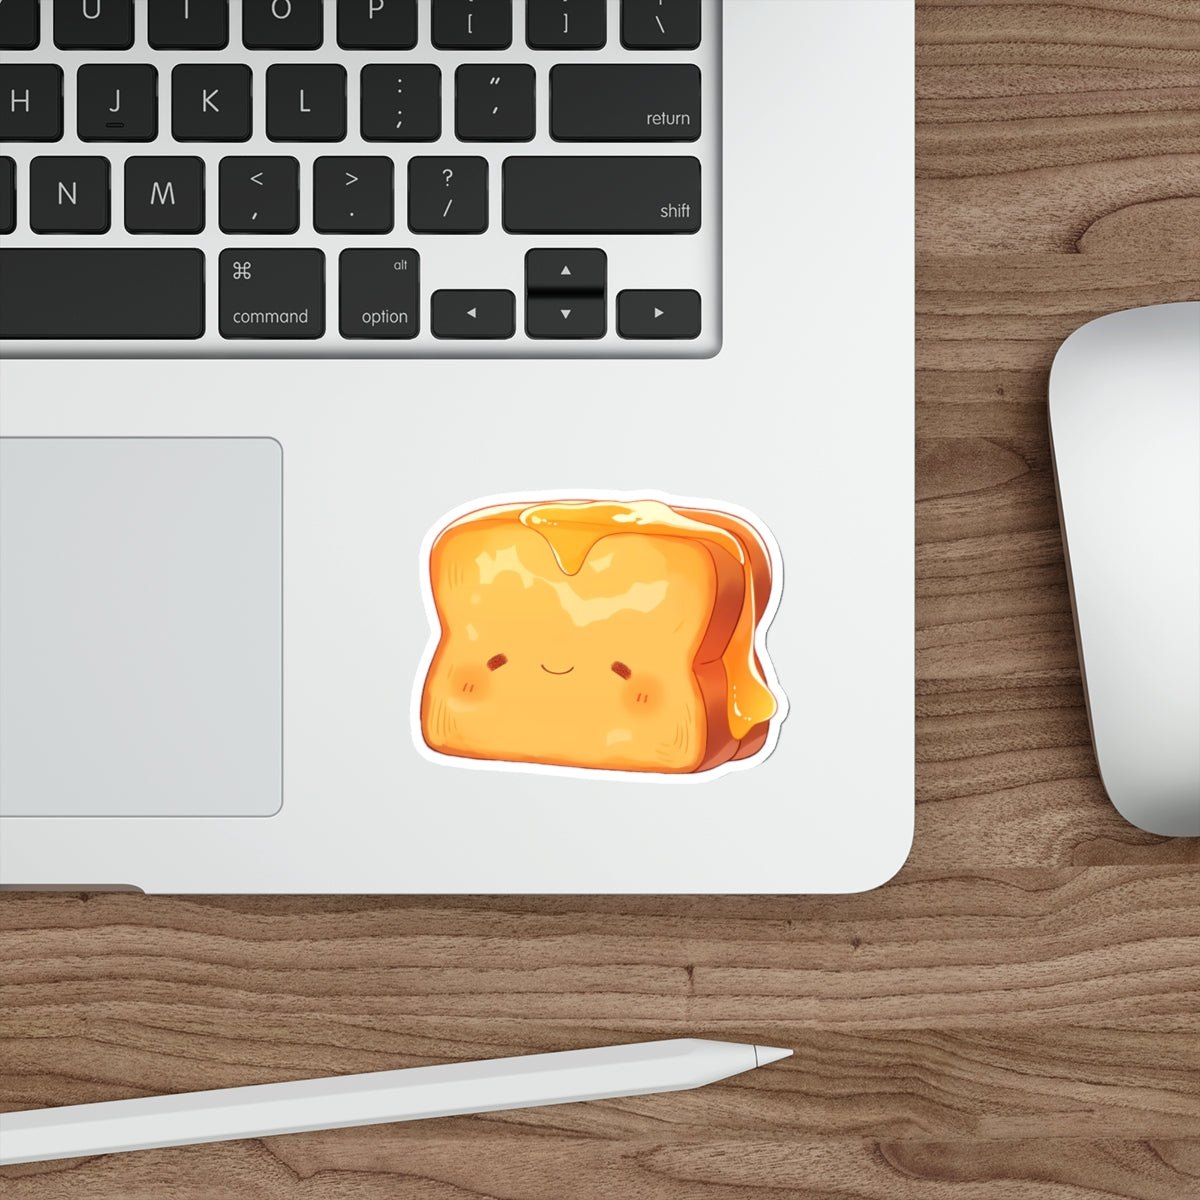 Grilly Cheese - Cute Die-Cut Sticker